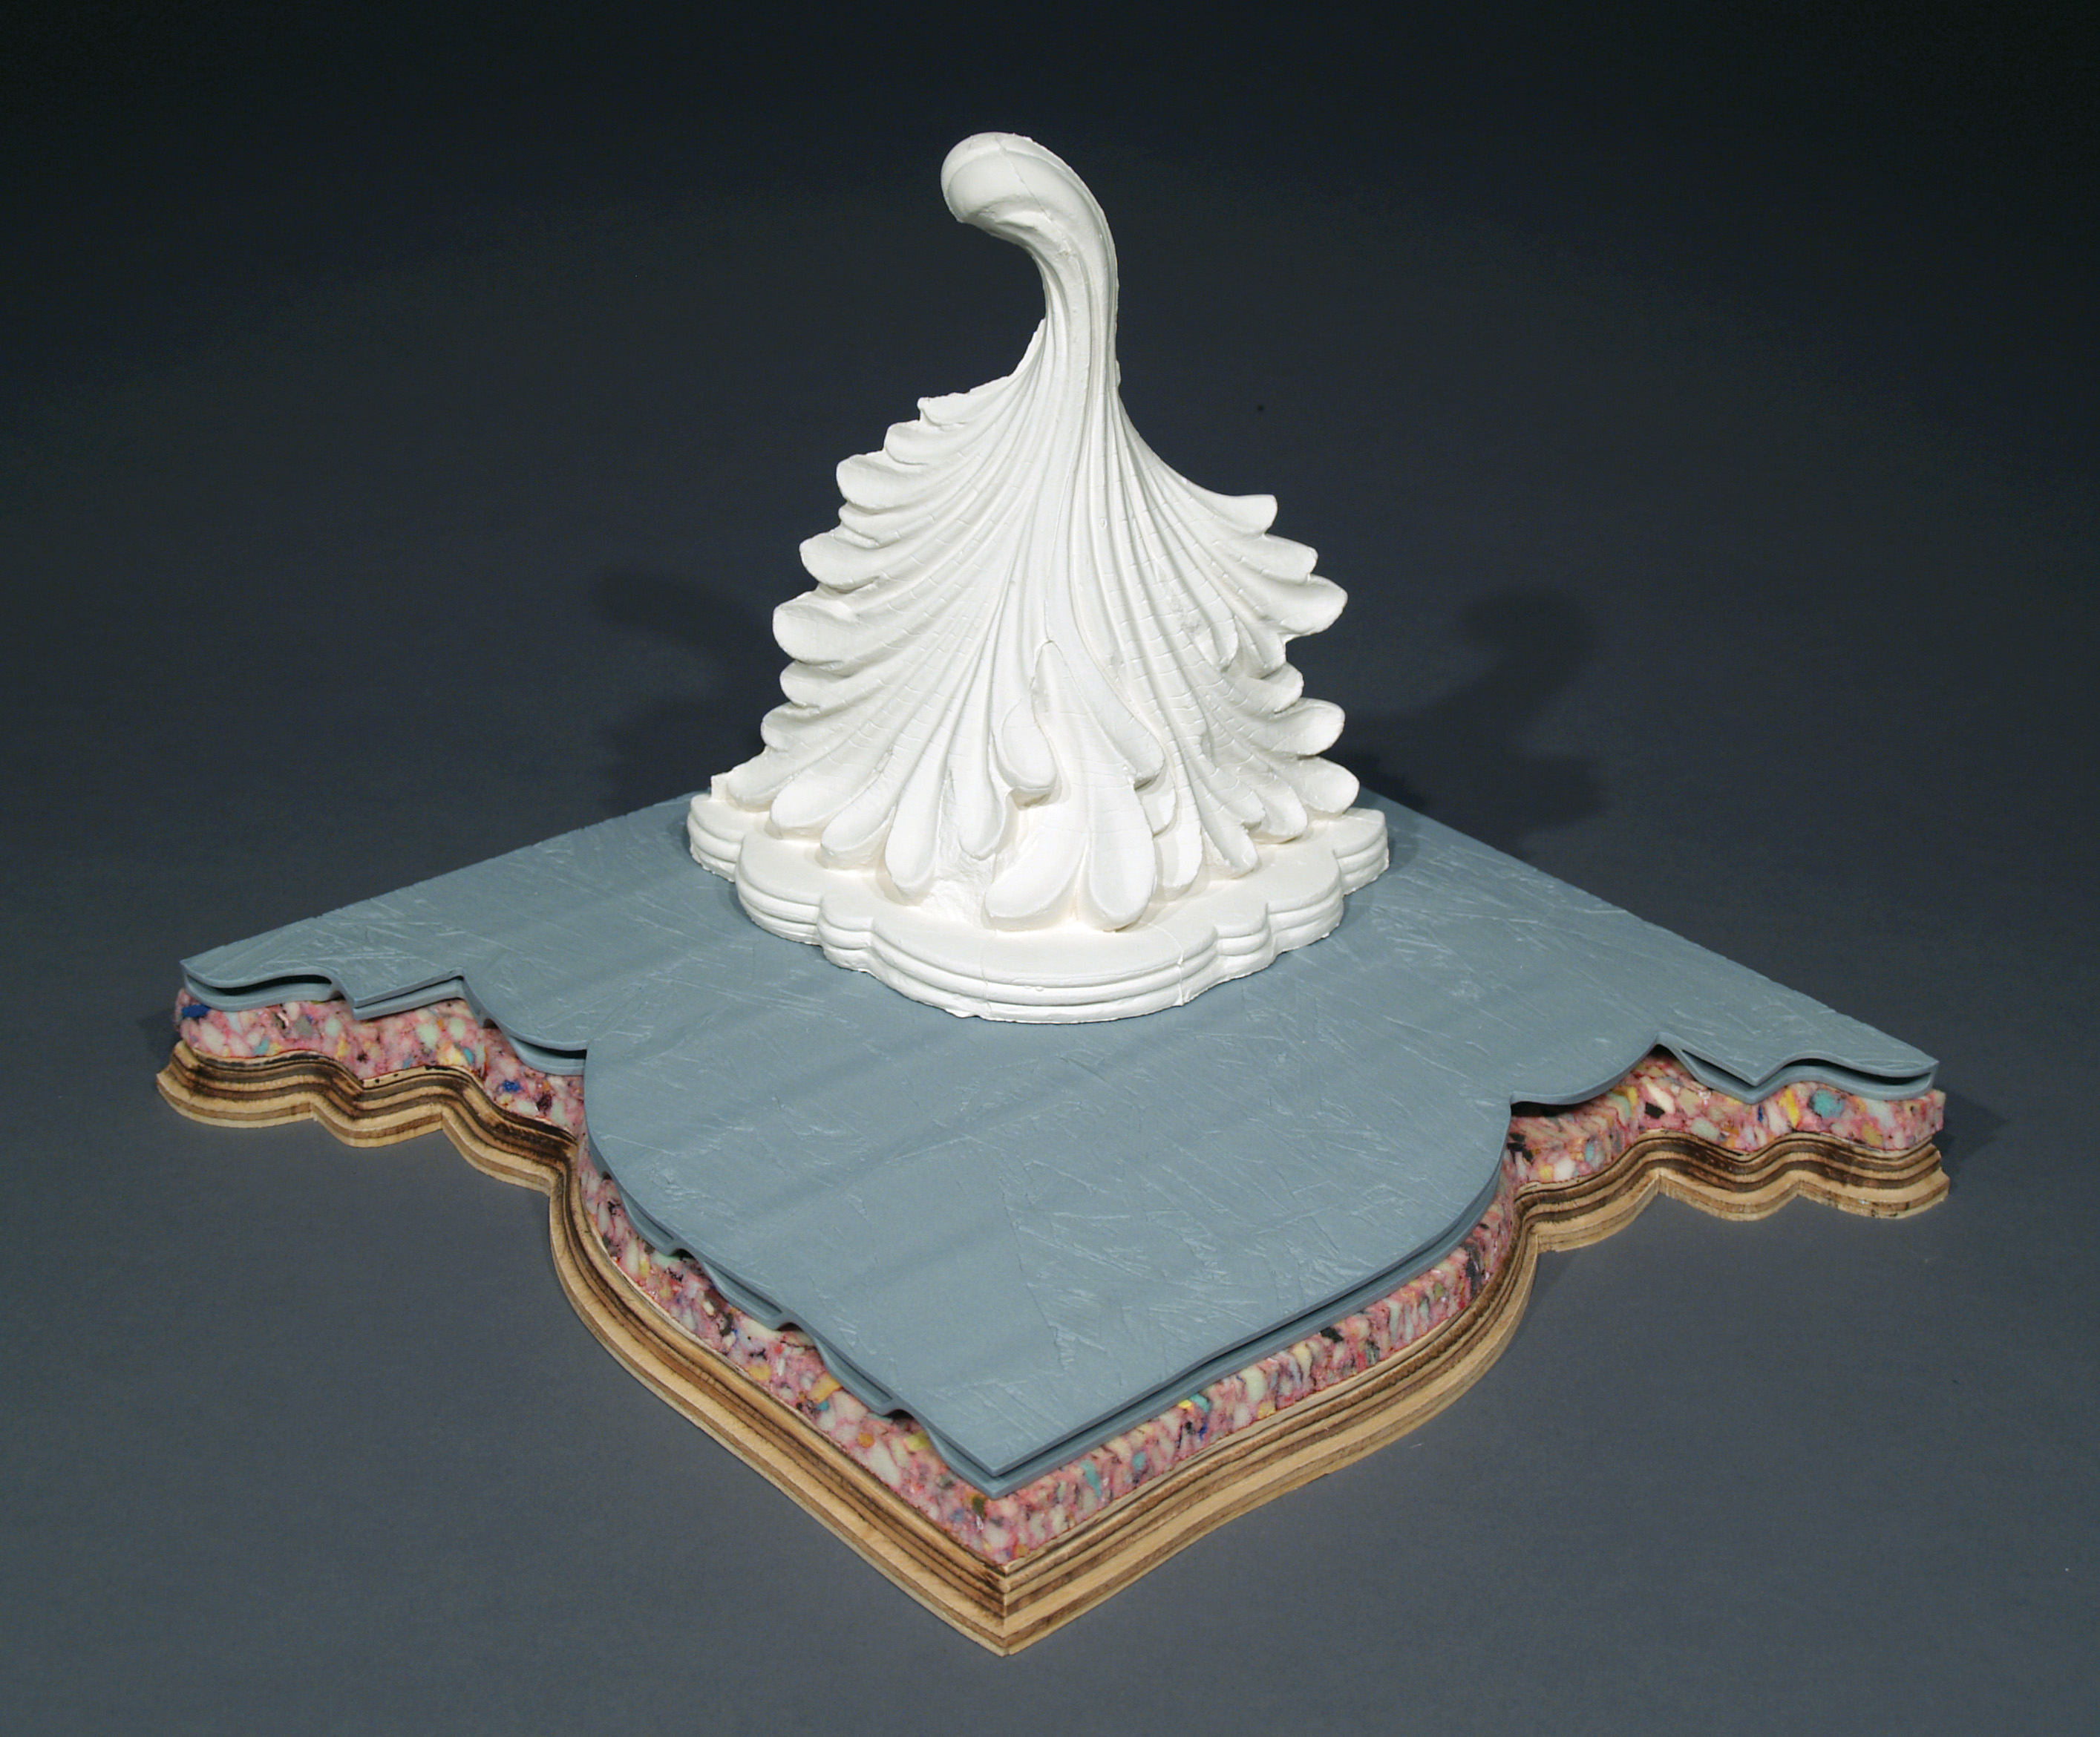 Laminate Filigree, 15 in. (38 cm) in diameter, porcelain, carpet padding, plywood, 2010.